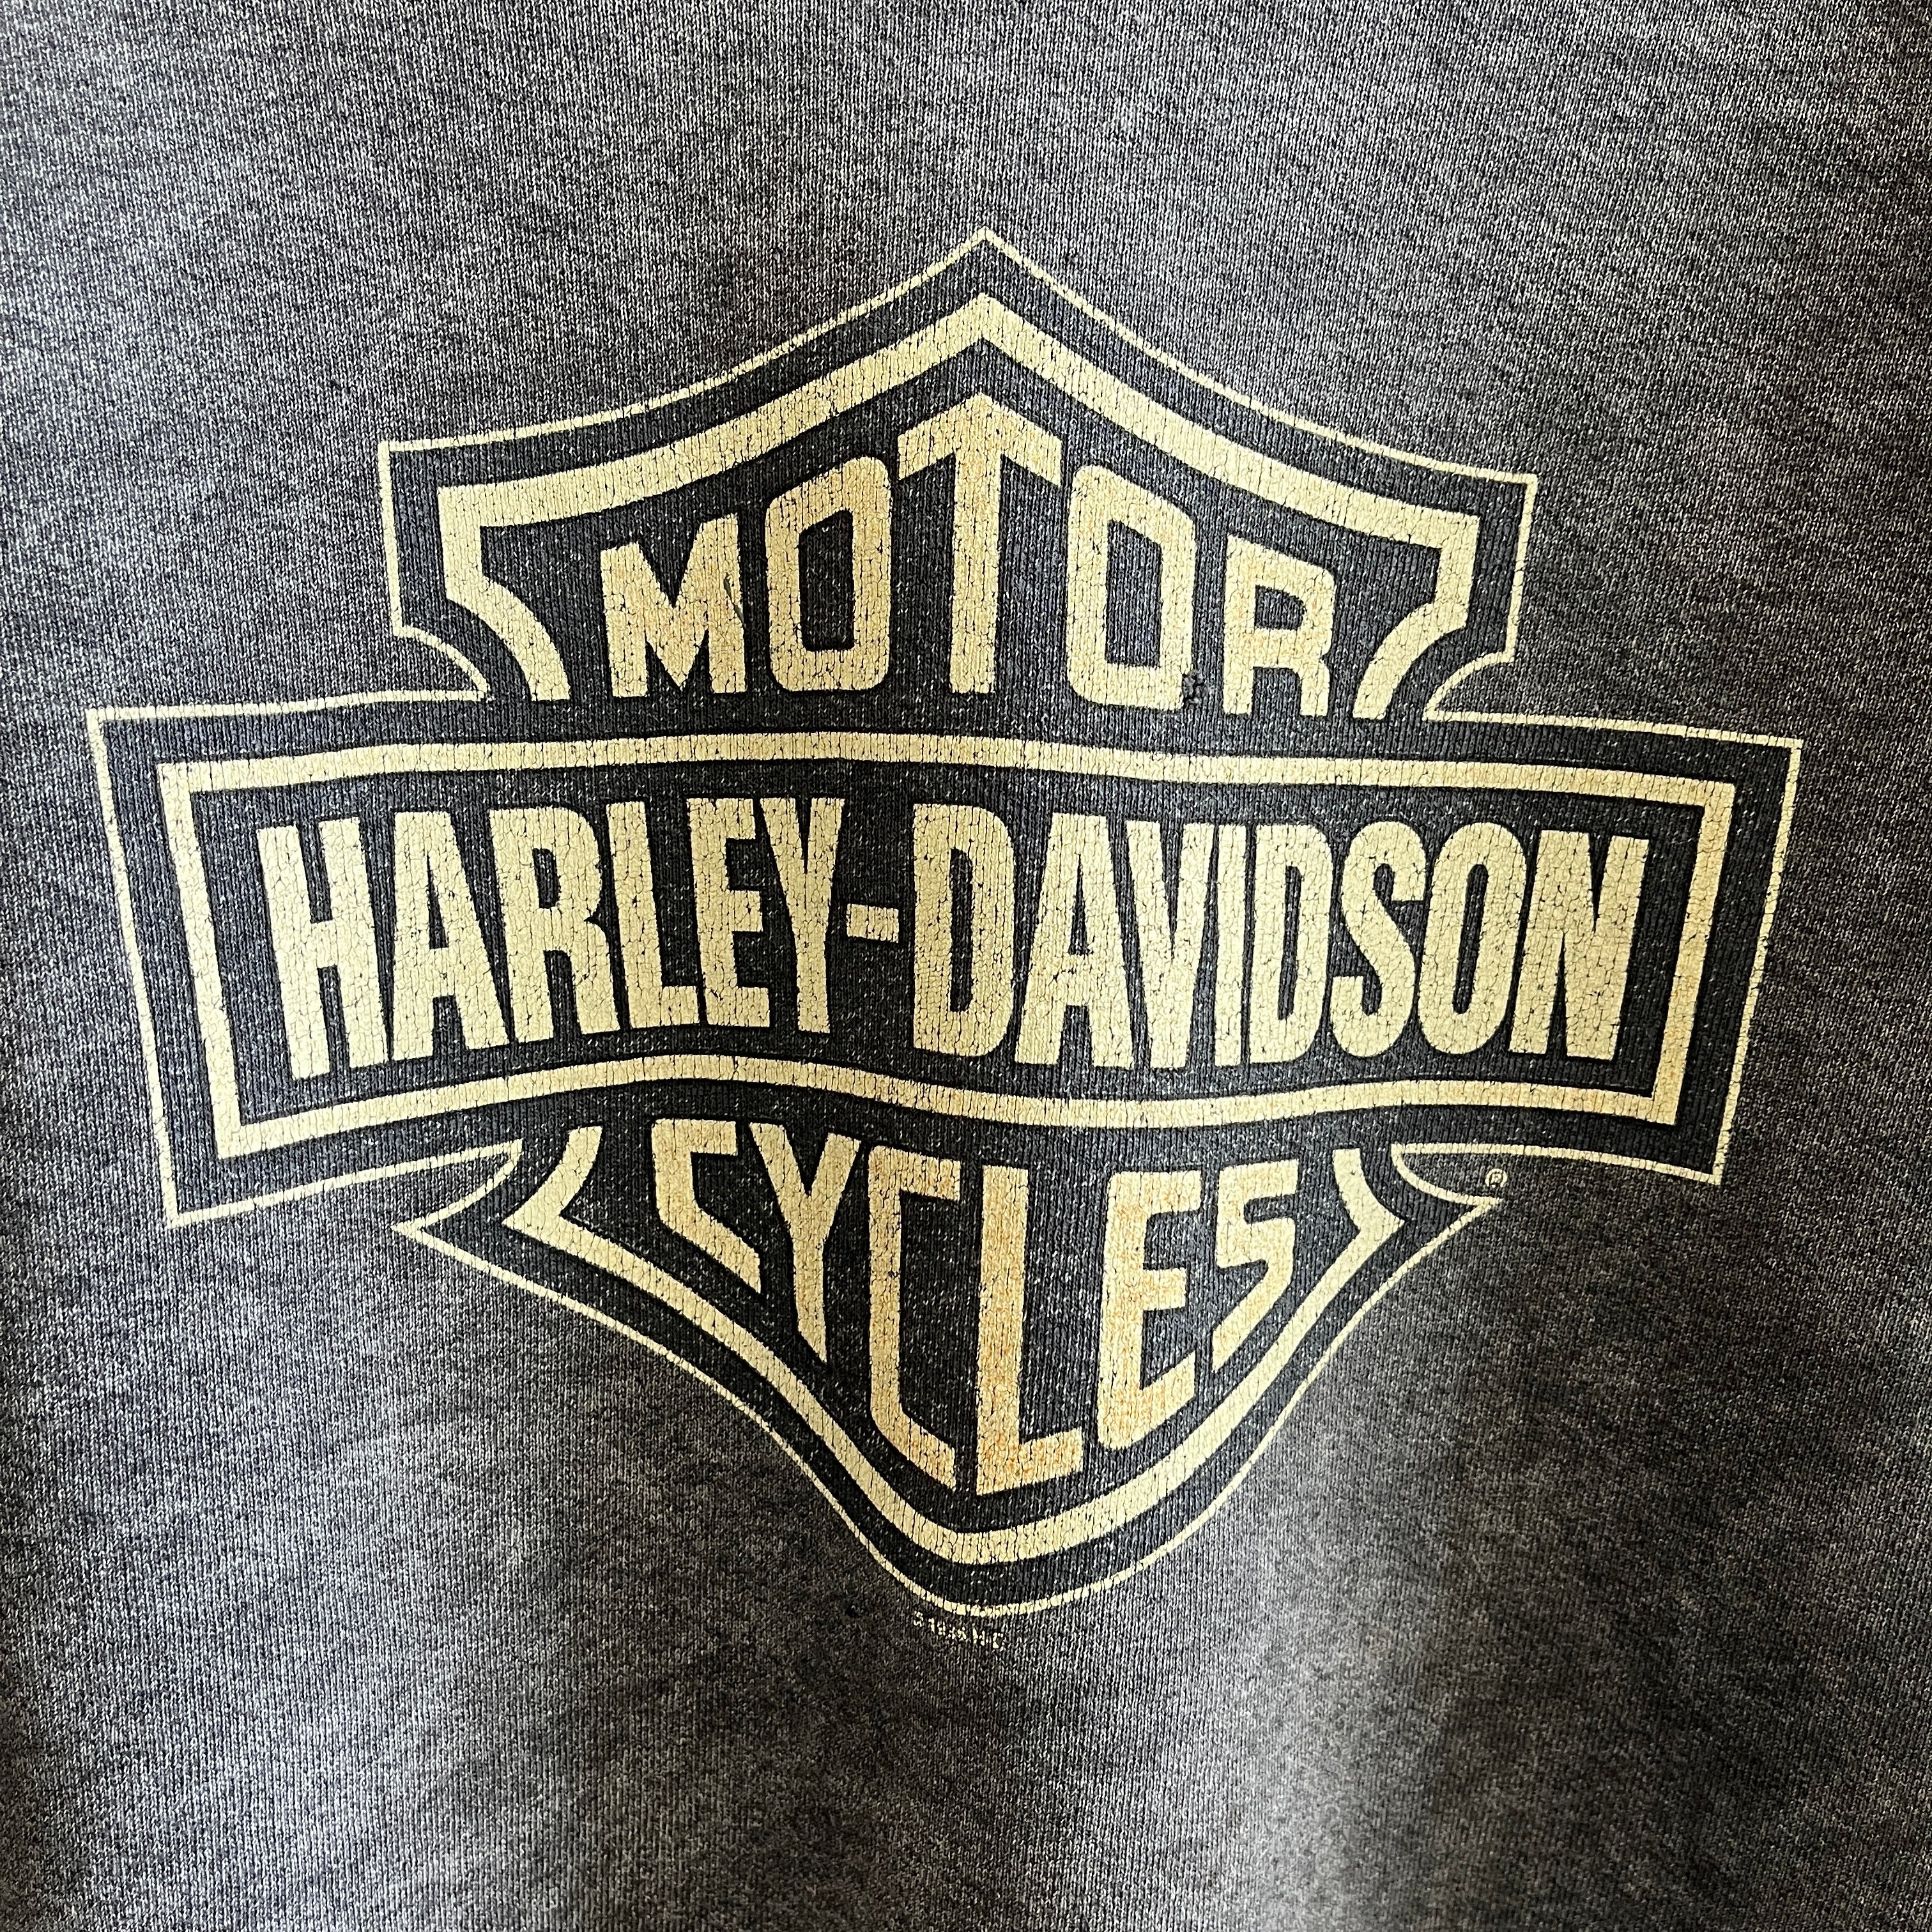 1996 Hand Dyed Harley THRASHED BEYOND Sweatshirt